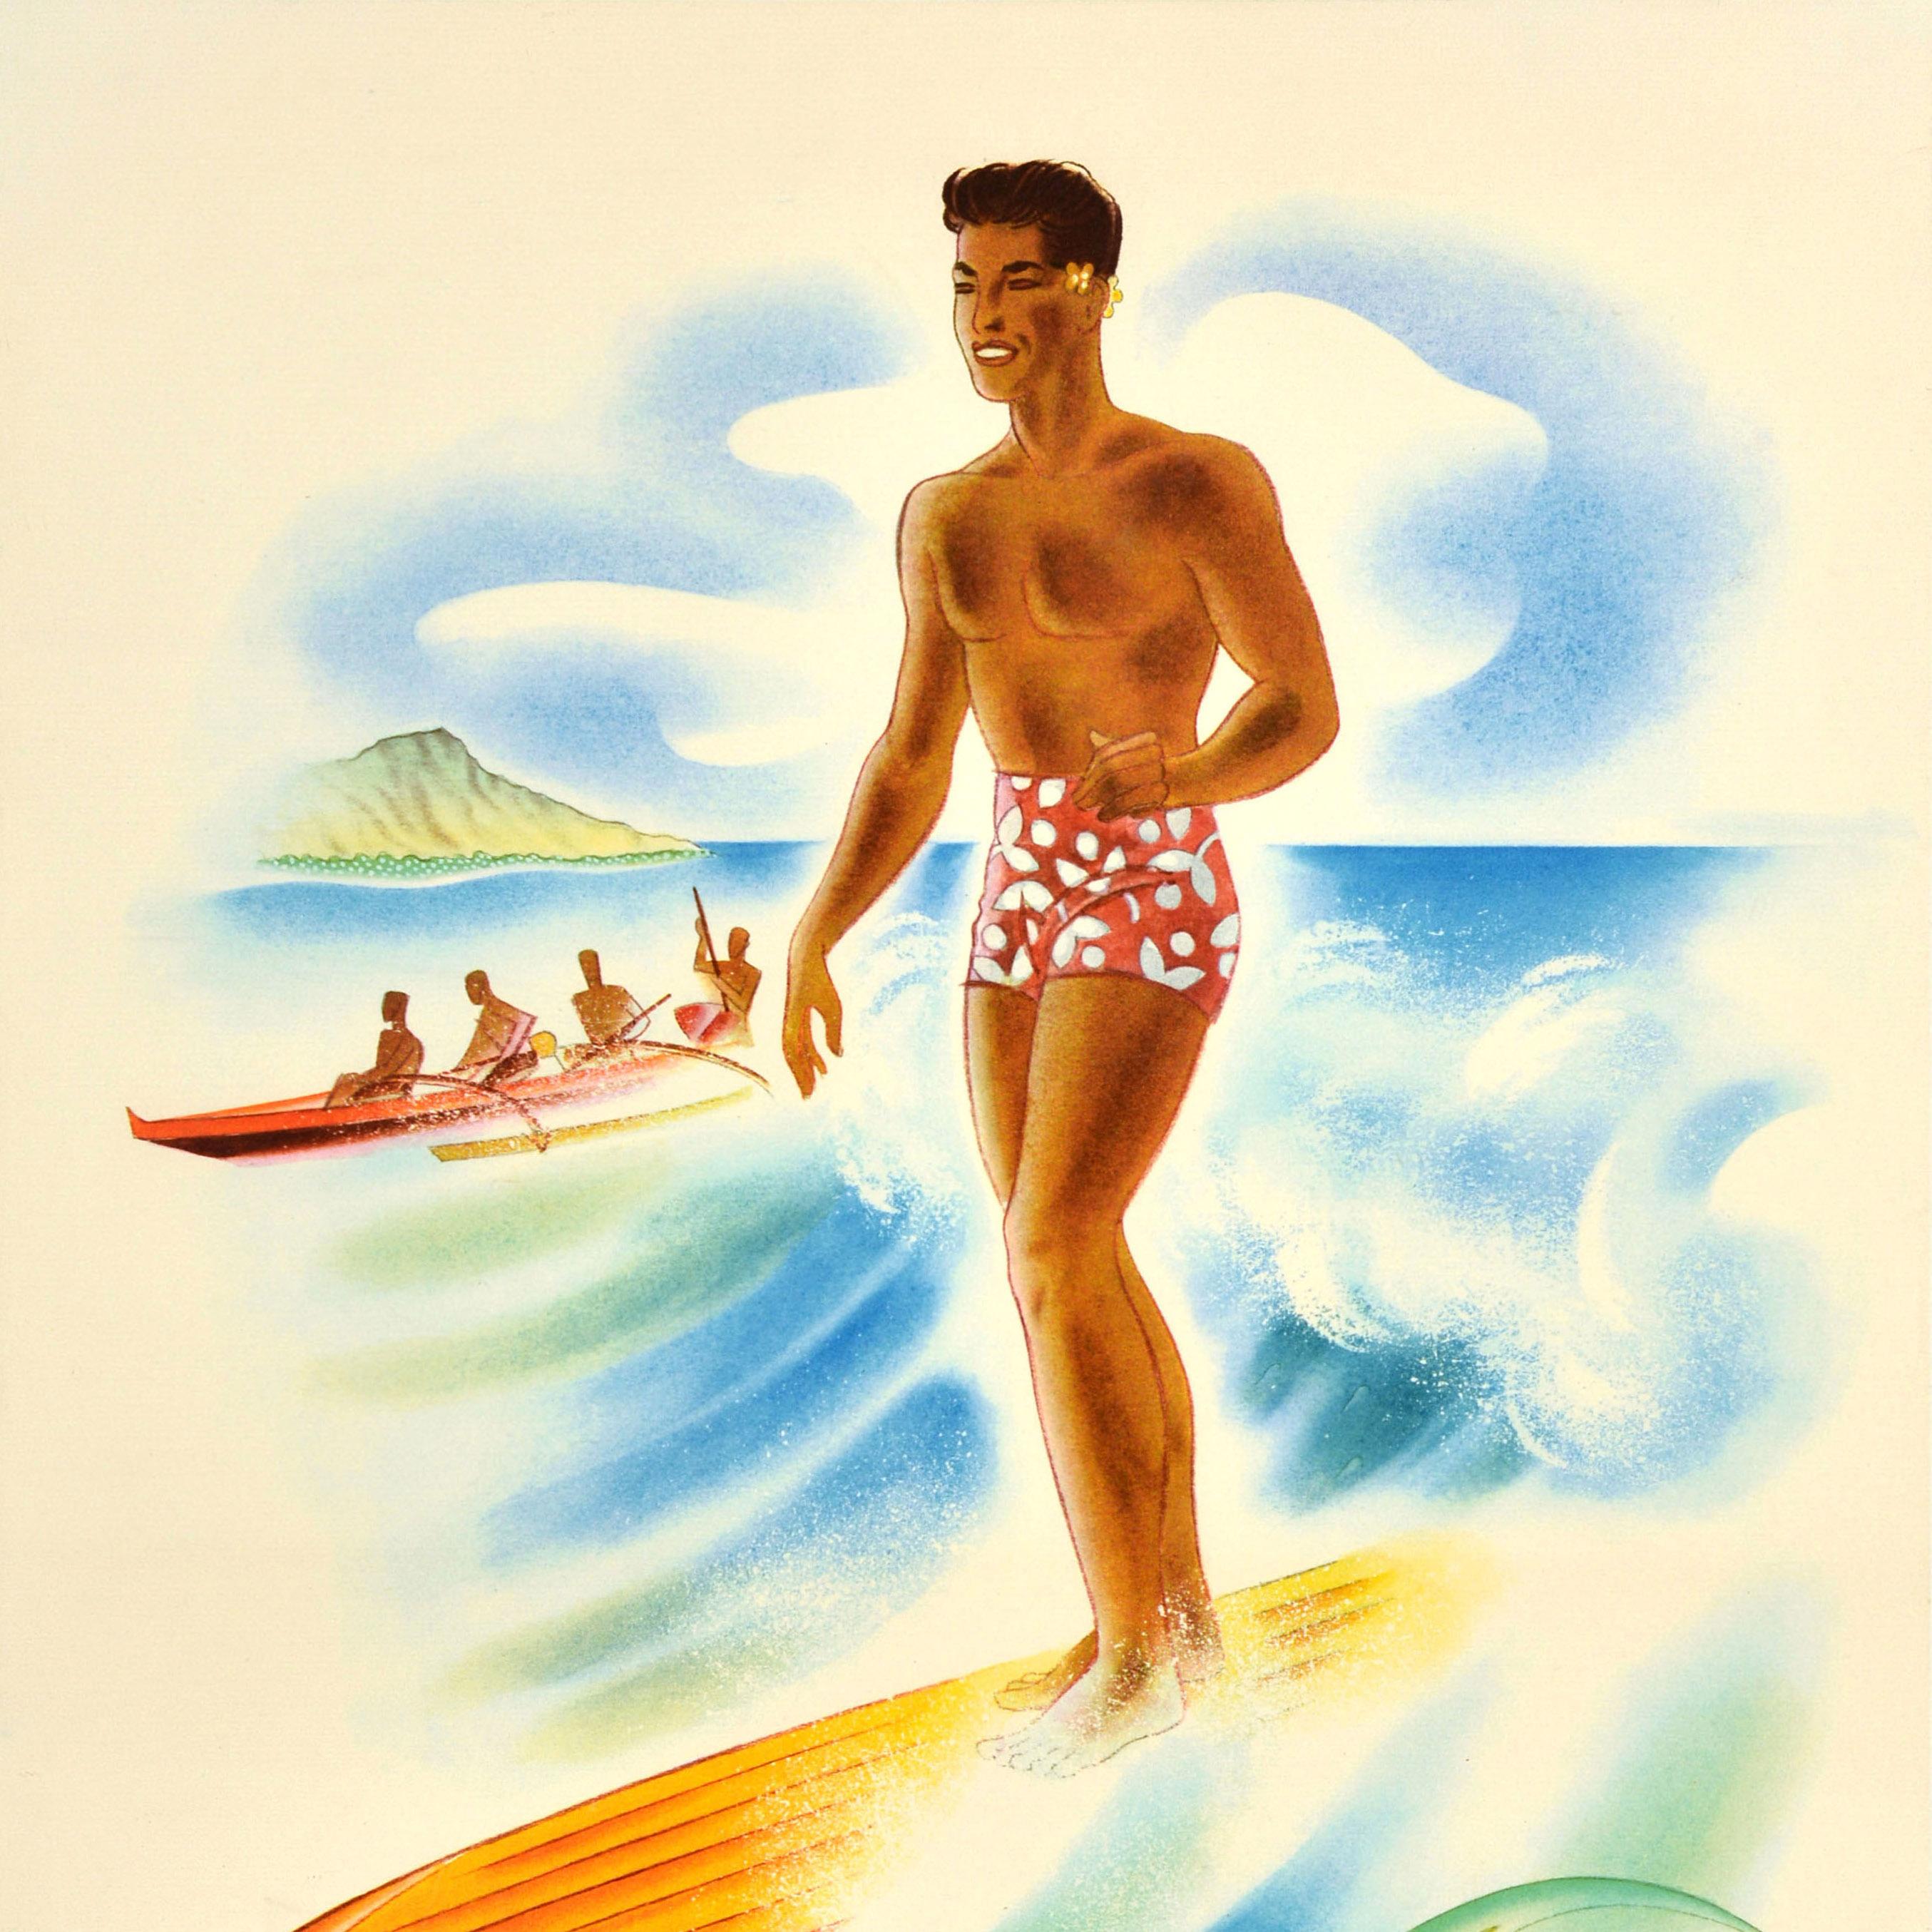 Original Vintage Travel Poster Matson Lines Cruise Hawaii Honolulu Surfer Beach - Print by Frank McIntosh